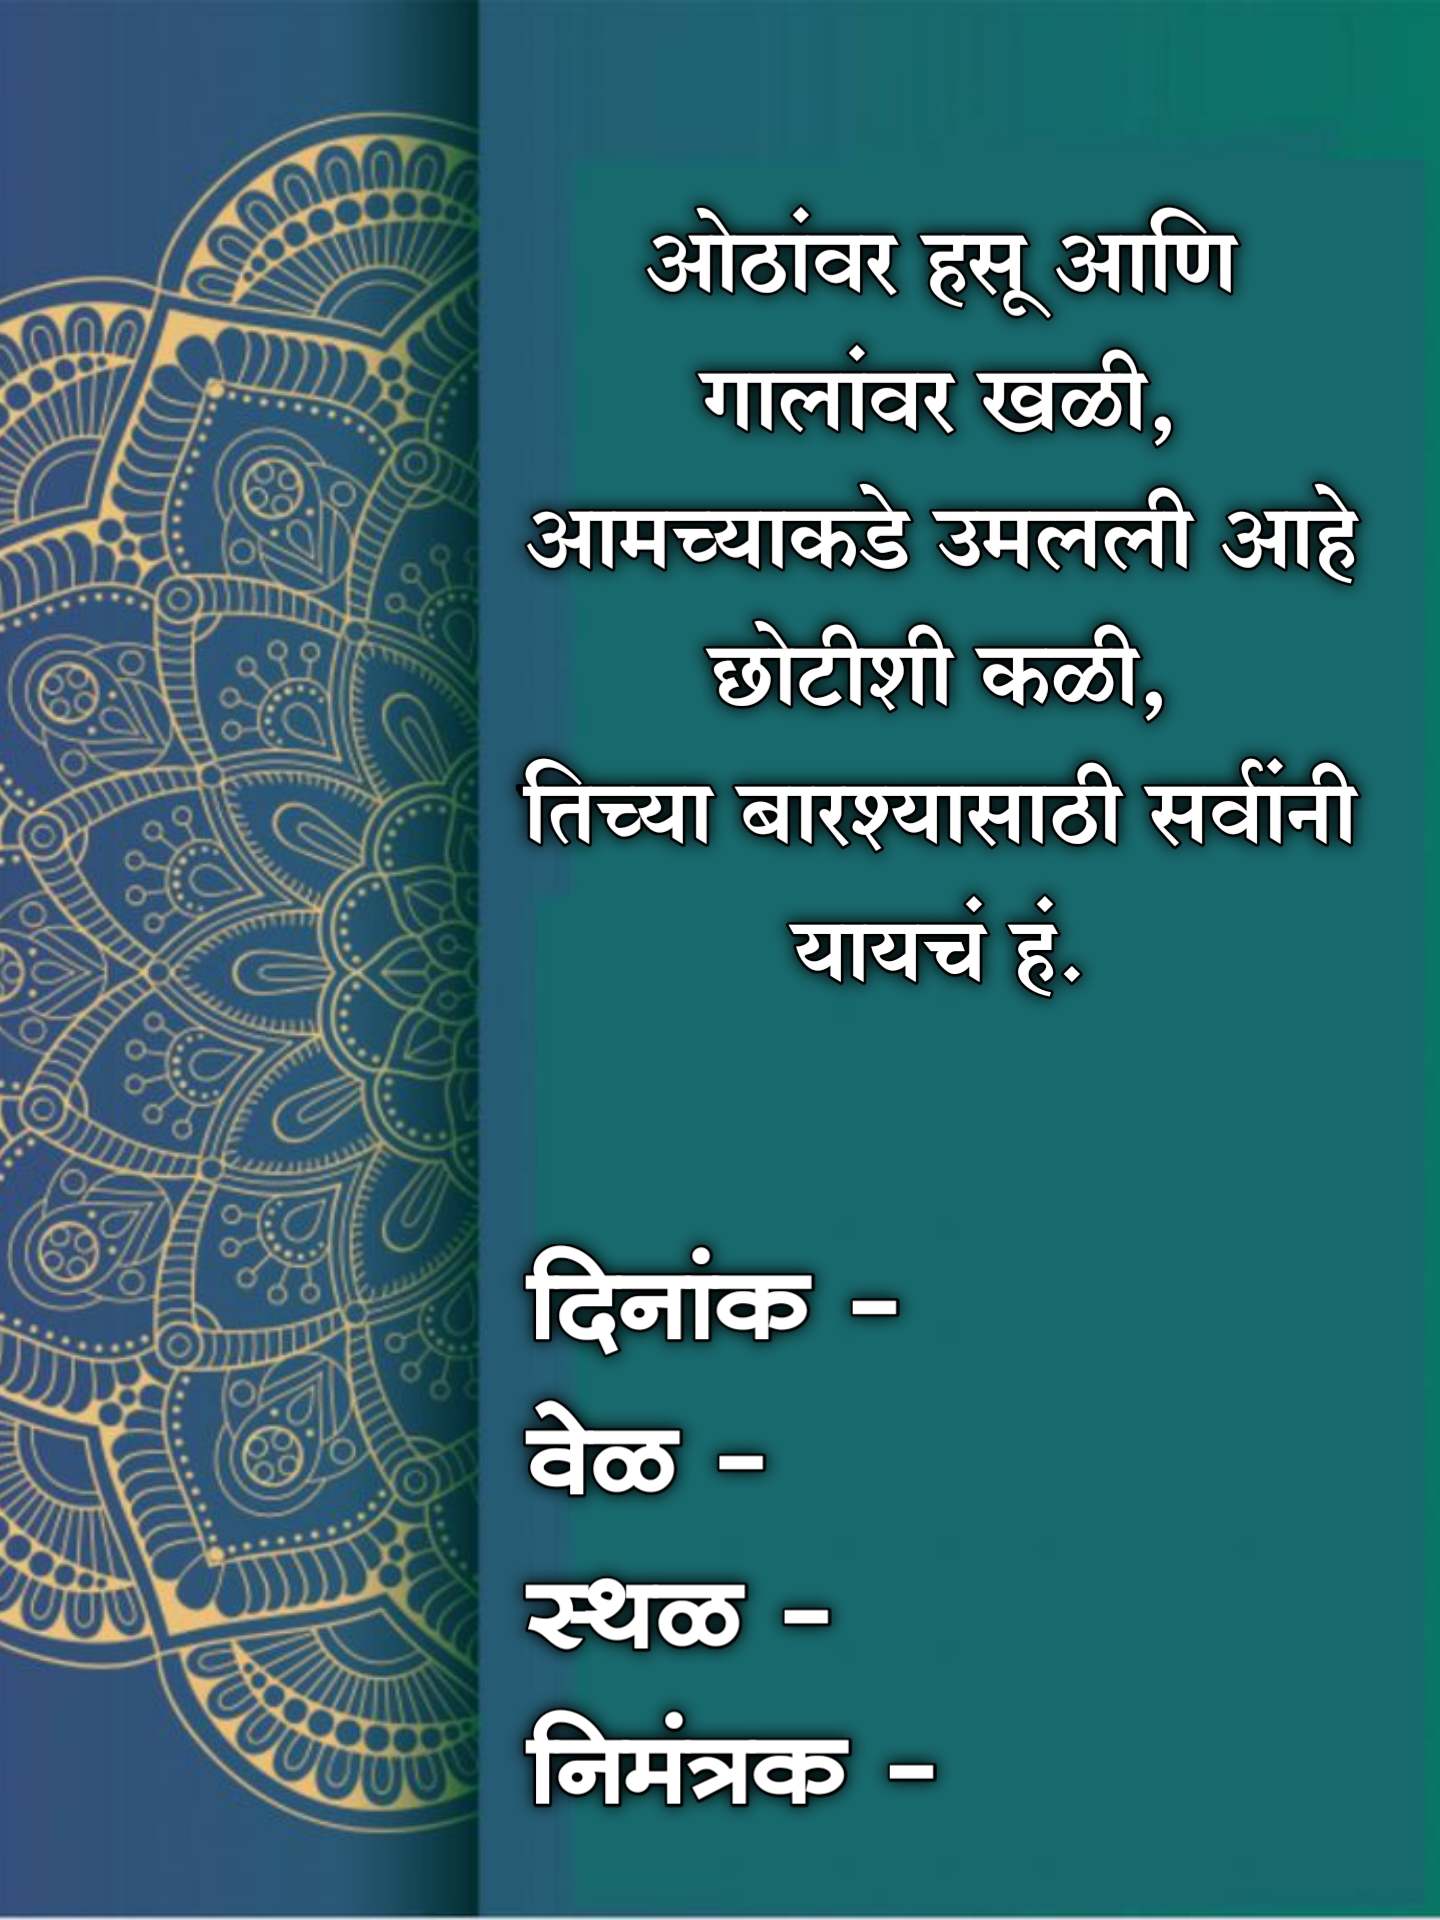 Barsa Invitation Card In Marathi 10 -